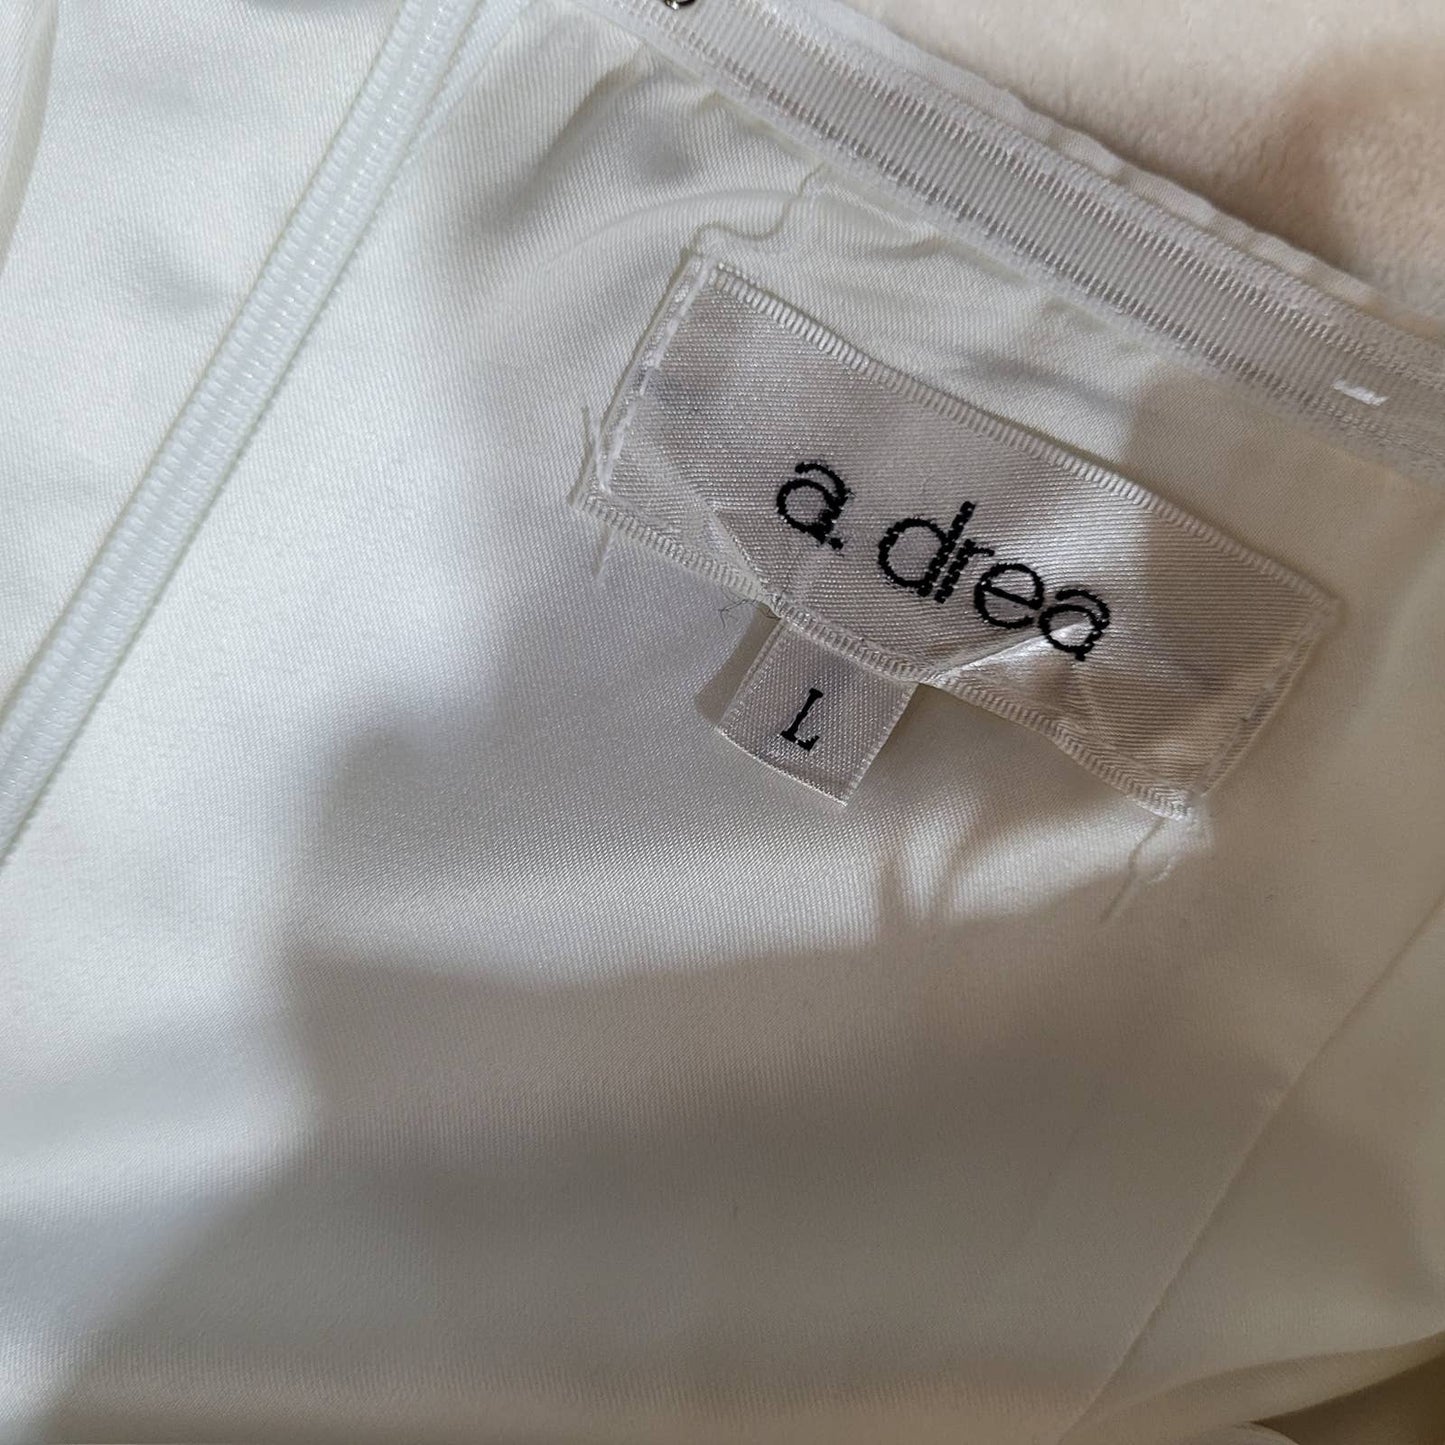 A. Drea White Cocktail Dress - Size LargeMarkita's Closeta. drea